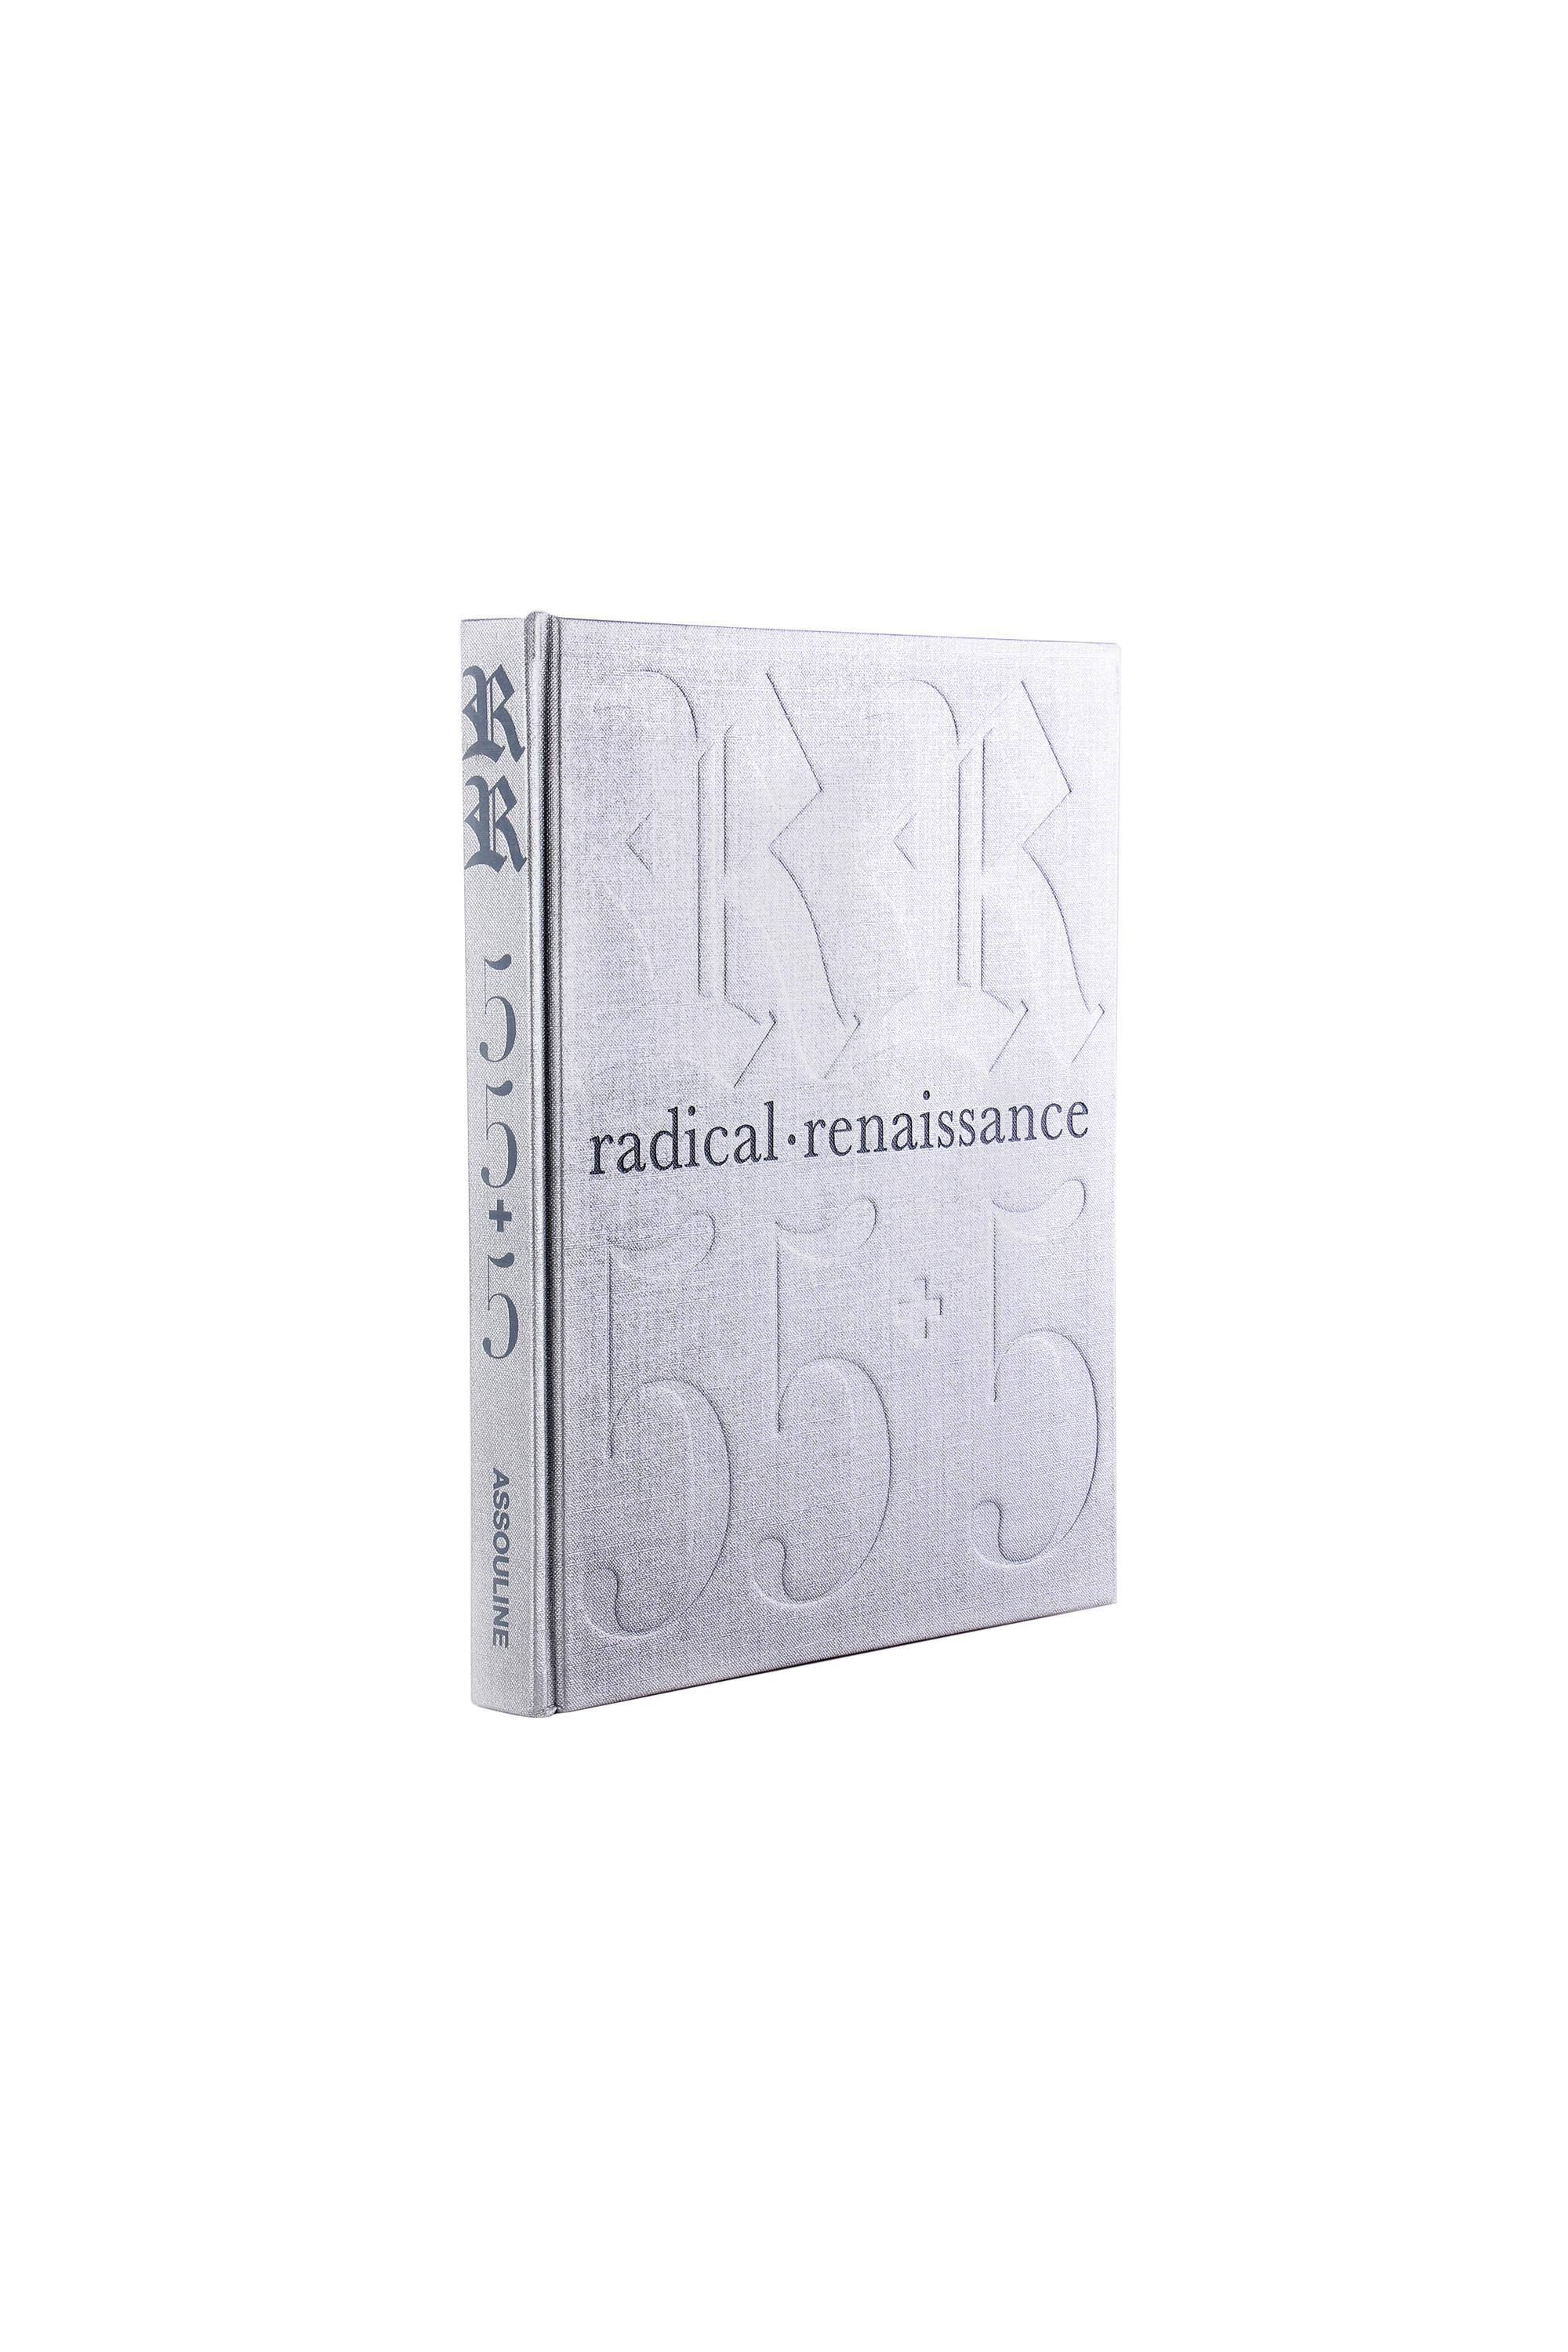 Diesel - Radical Renaissance 55+5 (signed by RR),  - Image 2